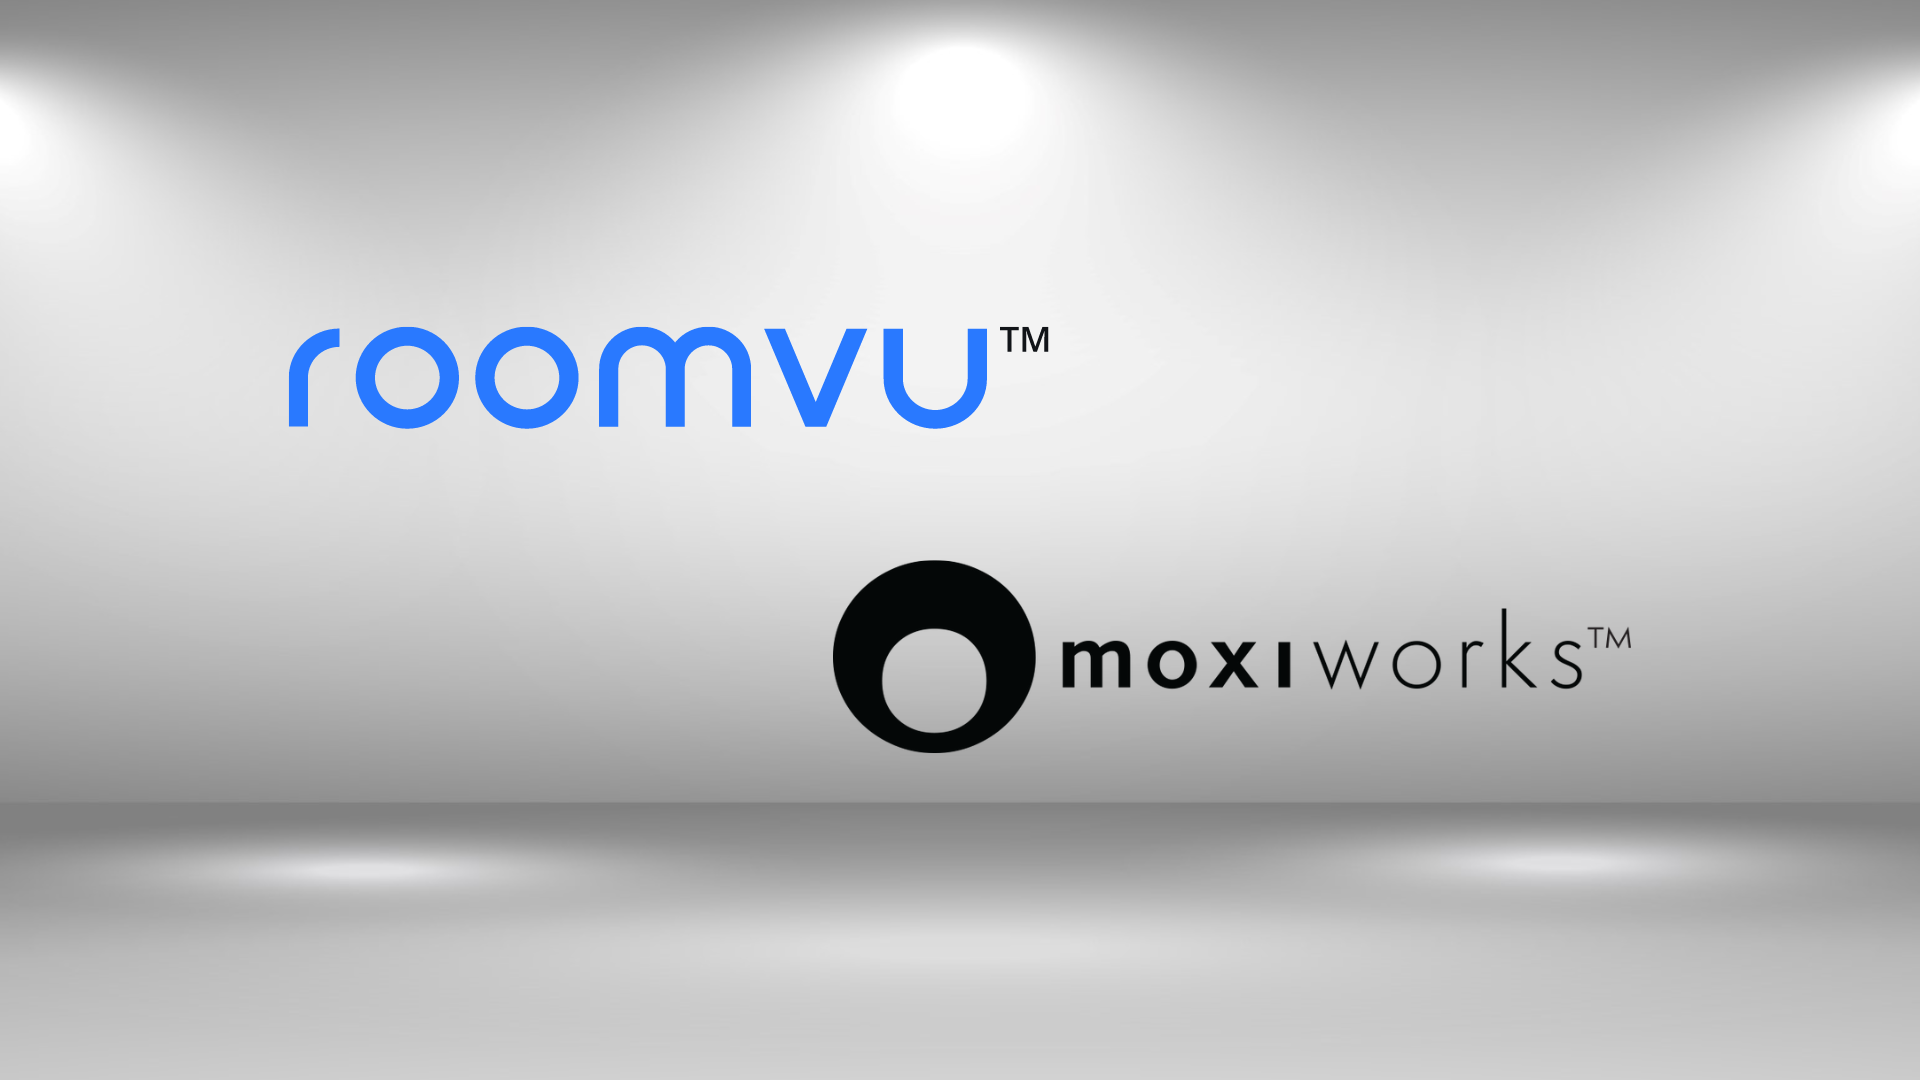 MoxiWorks with roomvu